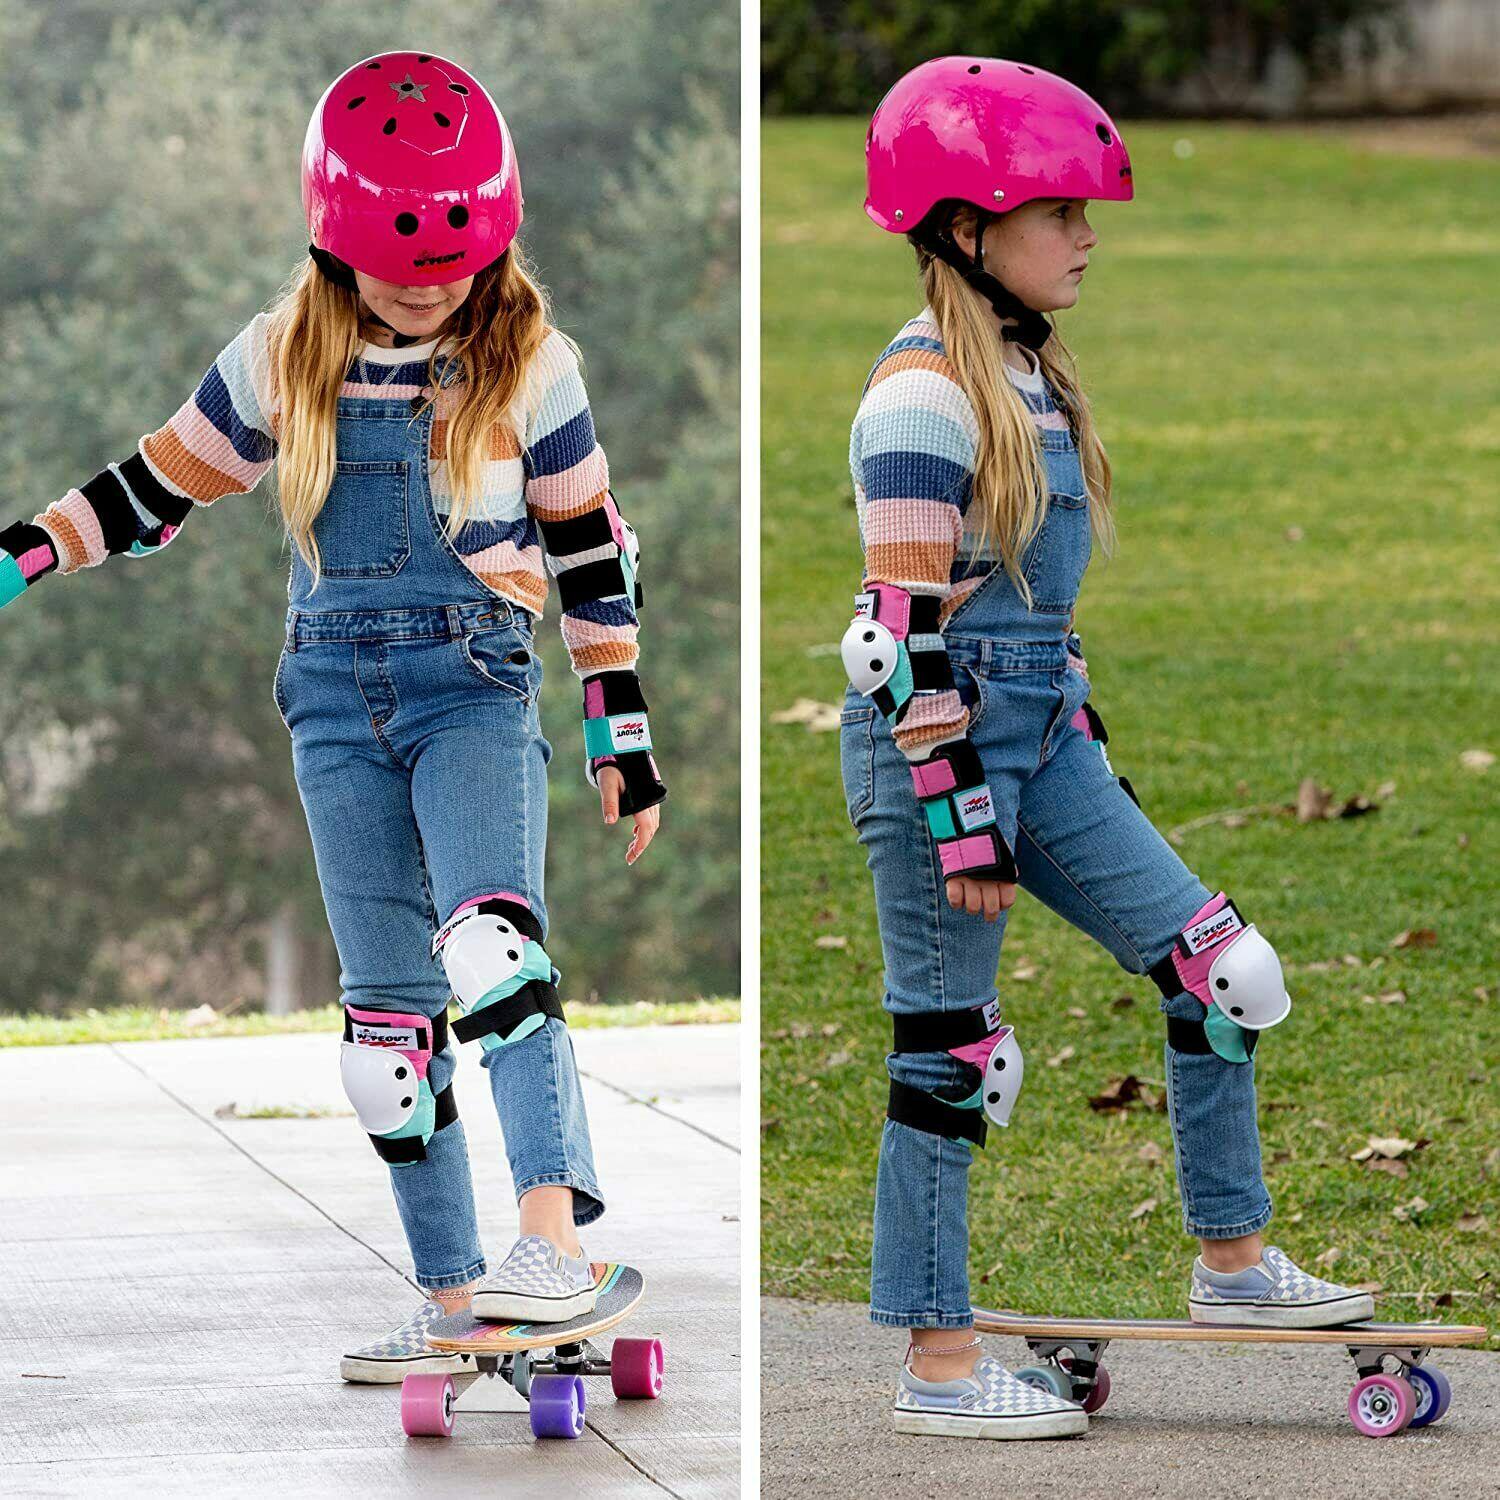 Wipeout Kids Bike Scooter Skate Helmet - Create own designs - Pink 8+ 4/5